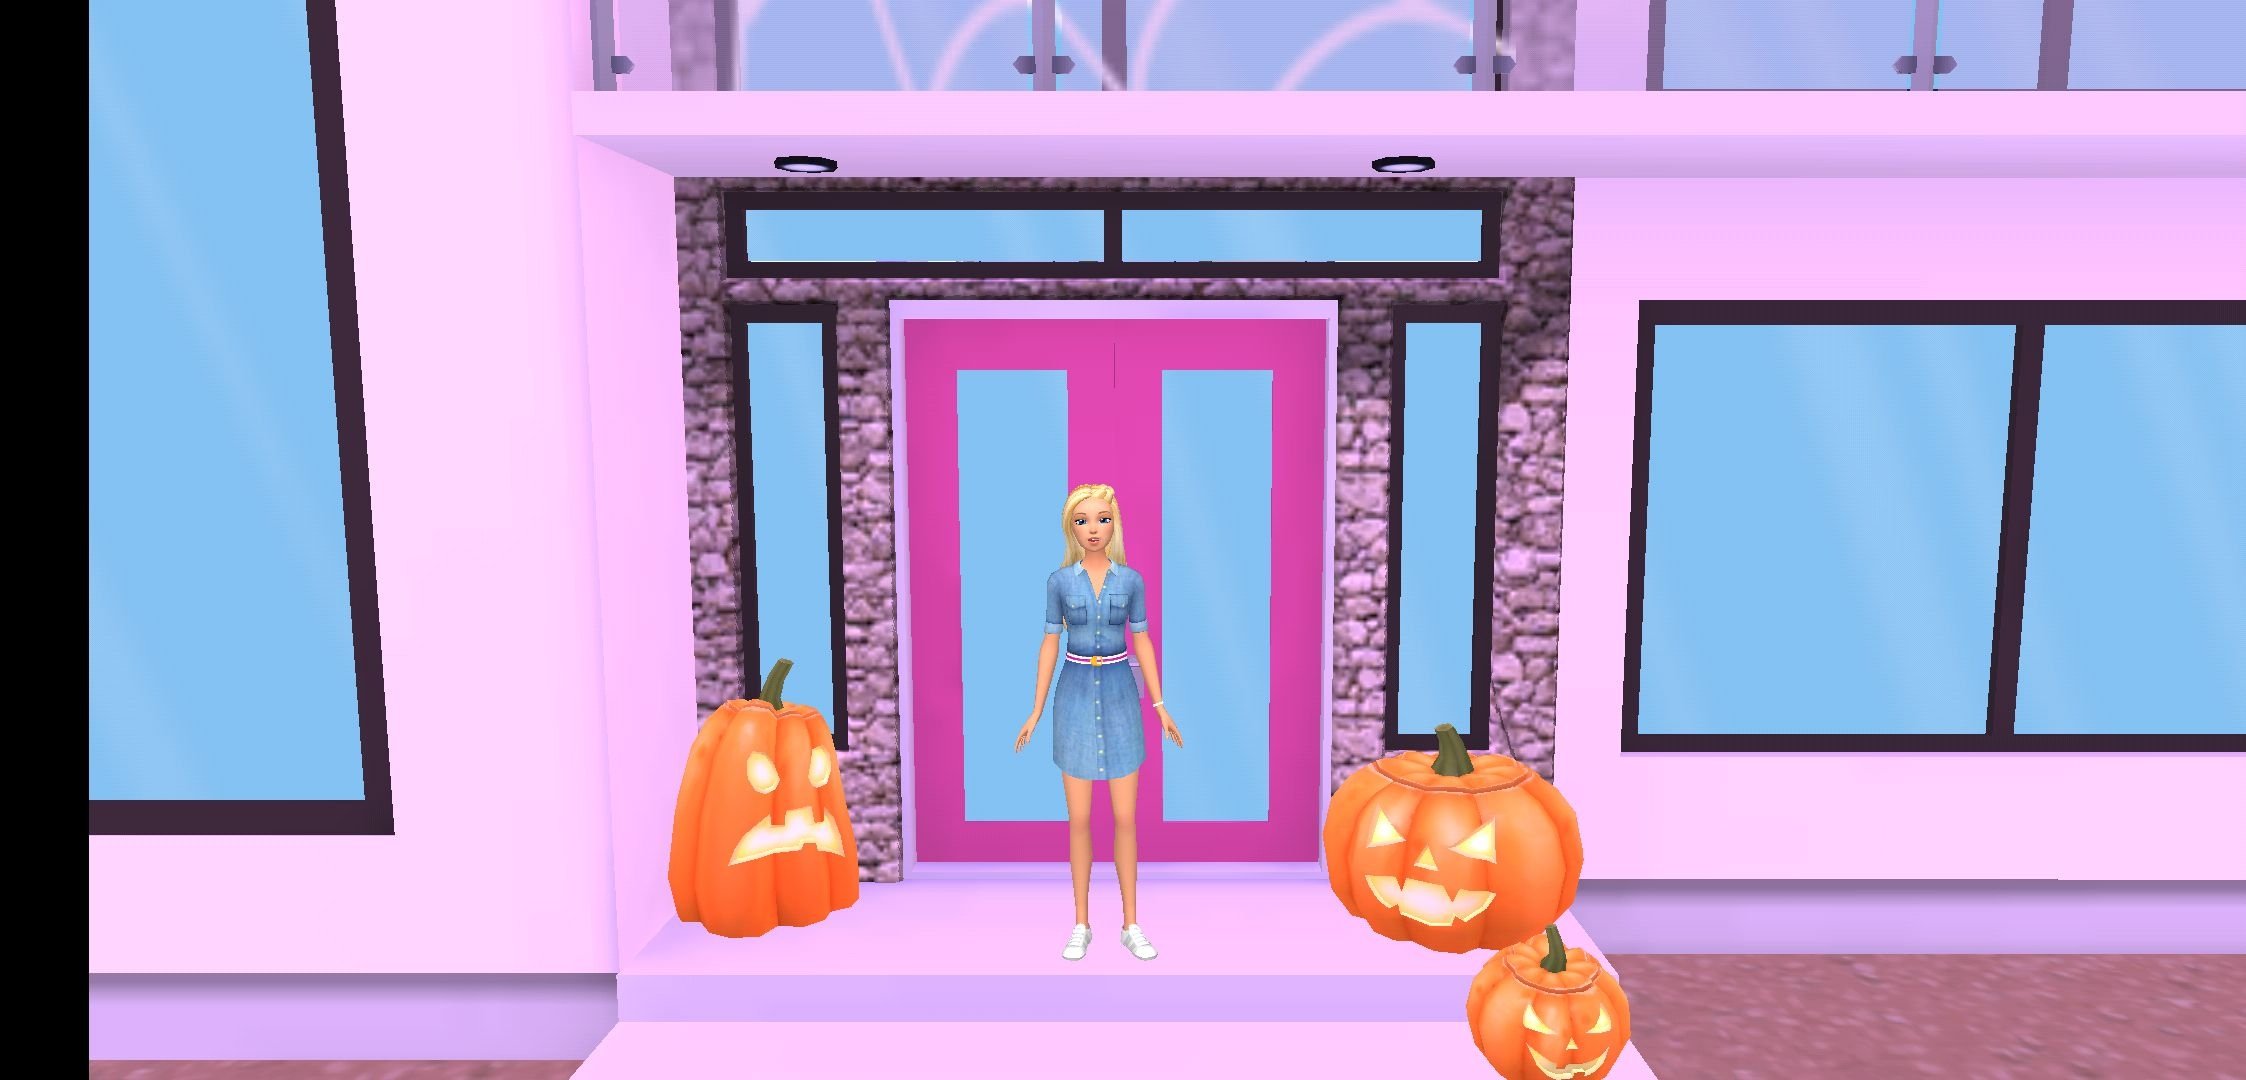 Baixar Barbie Dreamhouse Adventures 2021.10 Android - Download APK Grátis